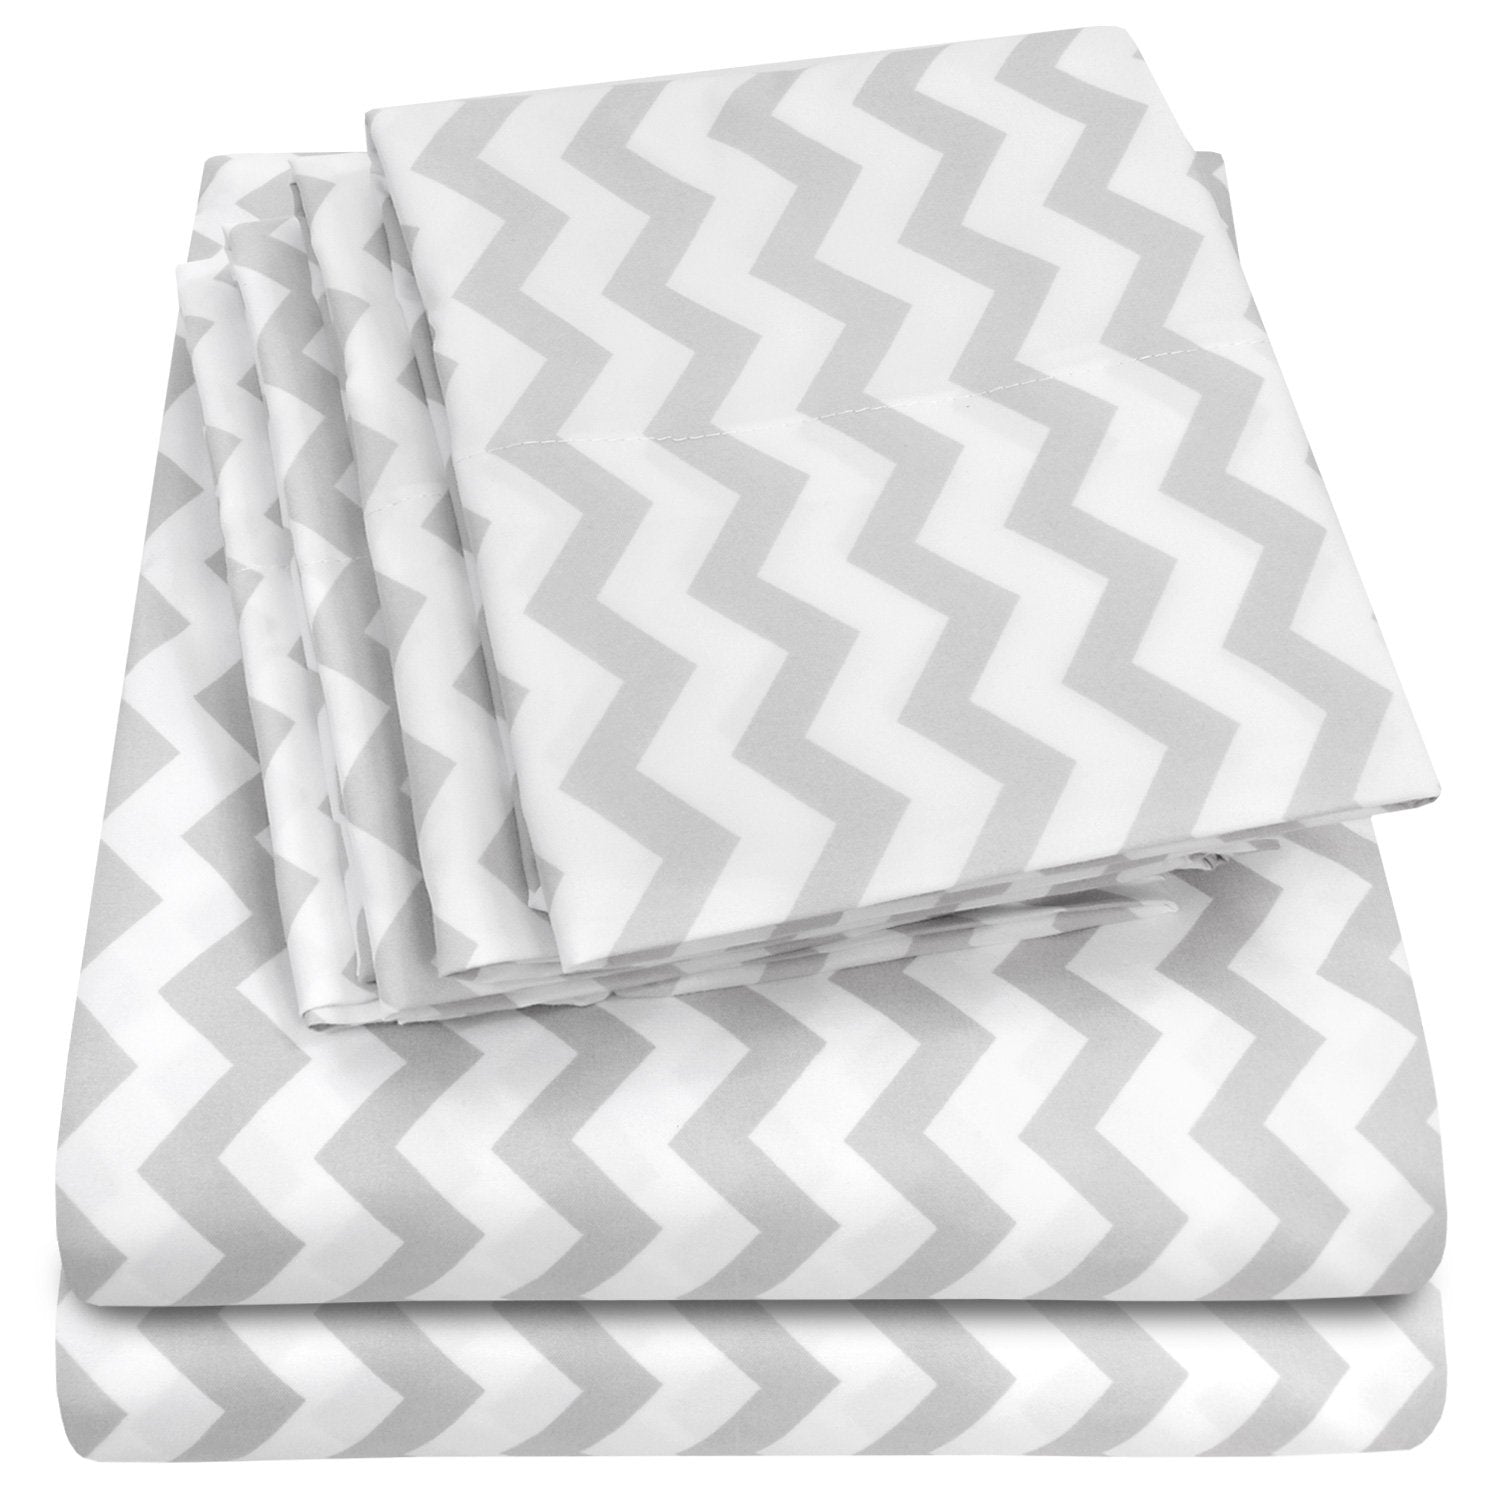 Deluxe 6-Piece Bed Sheet Set (Loft Chevron Gray) - Folded